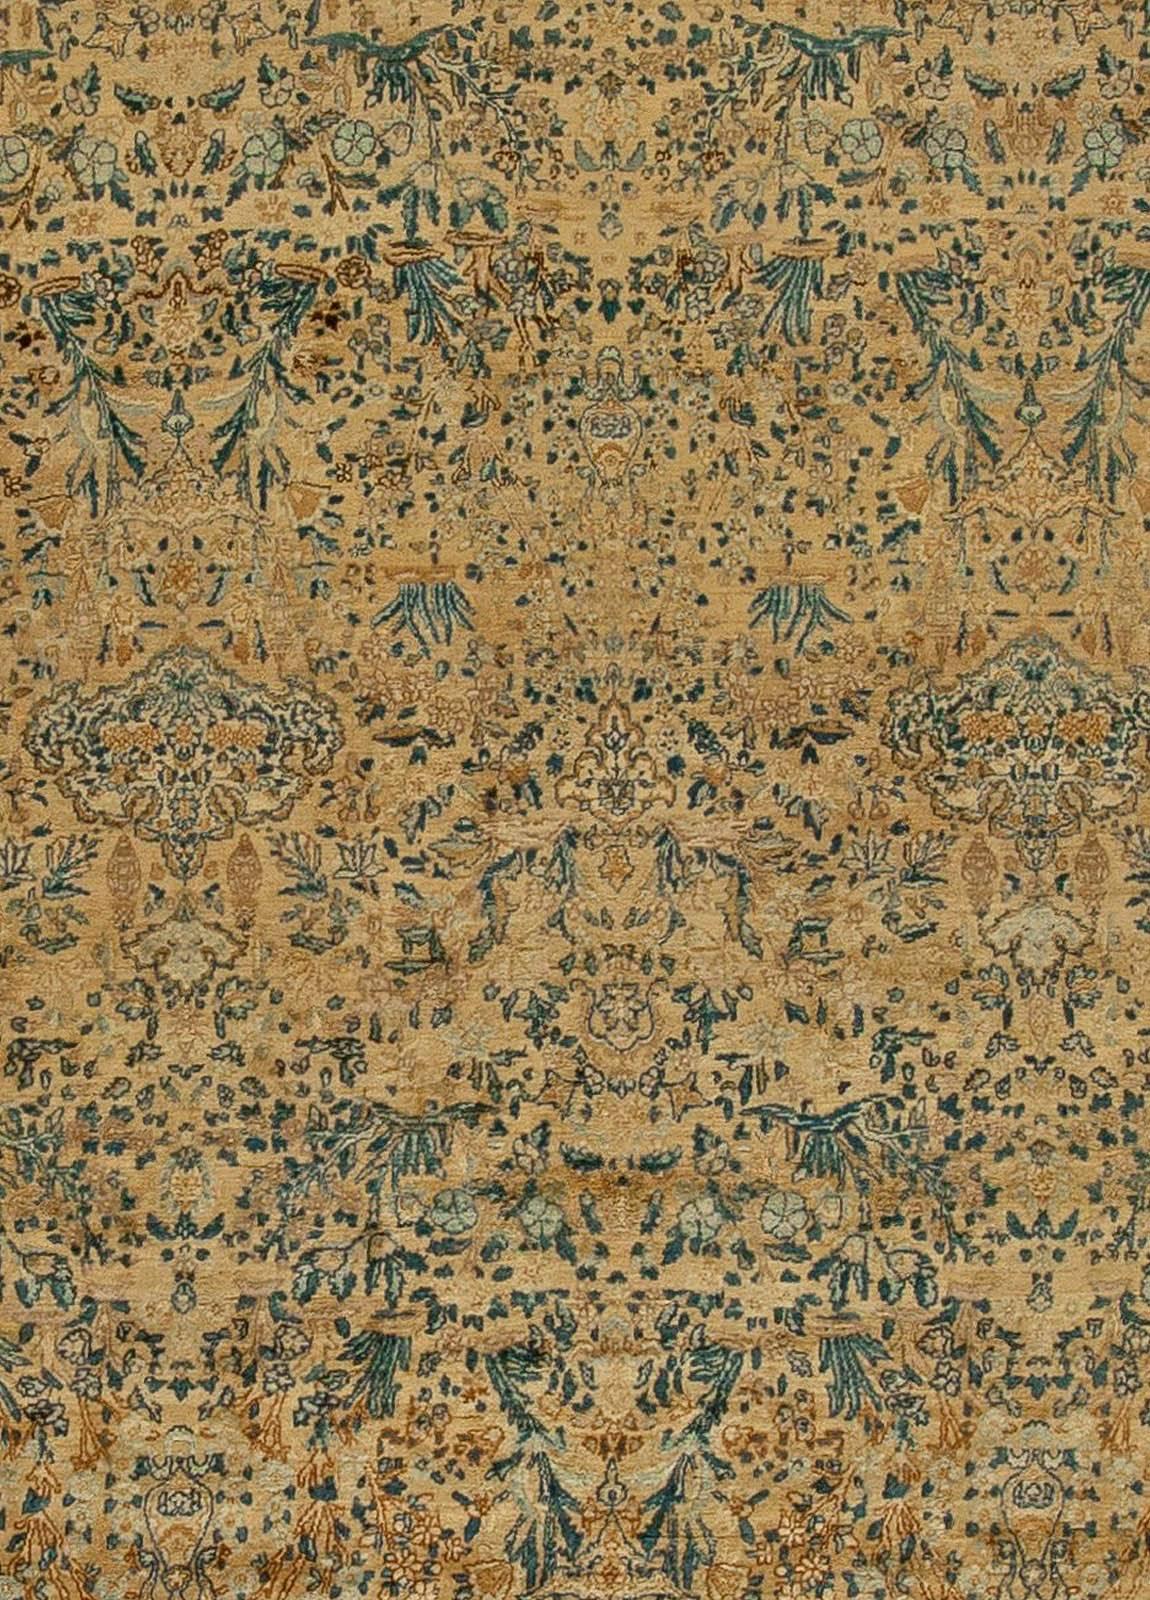 Antique Persian Kirman Handmade Wool Rug
Size: 13'0